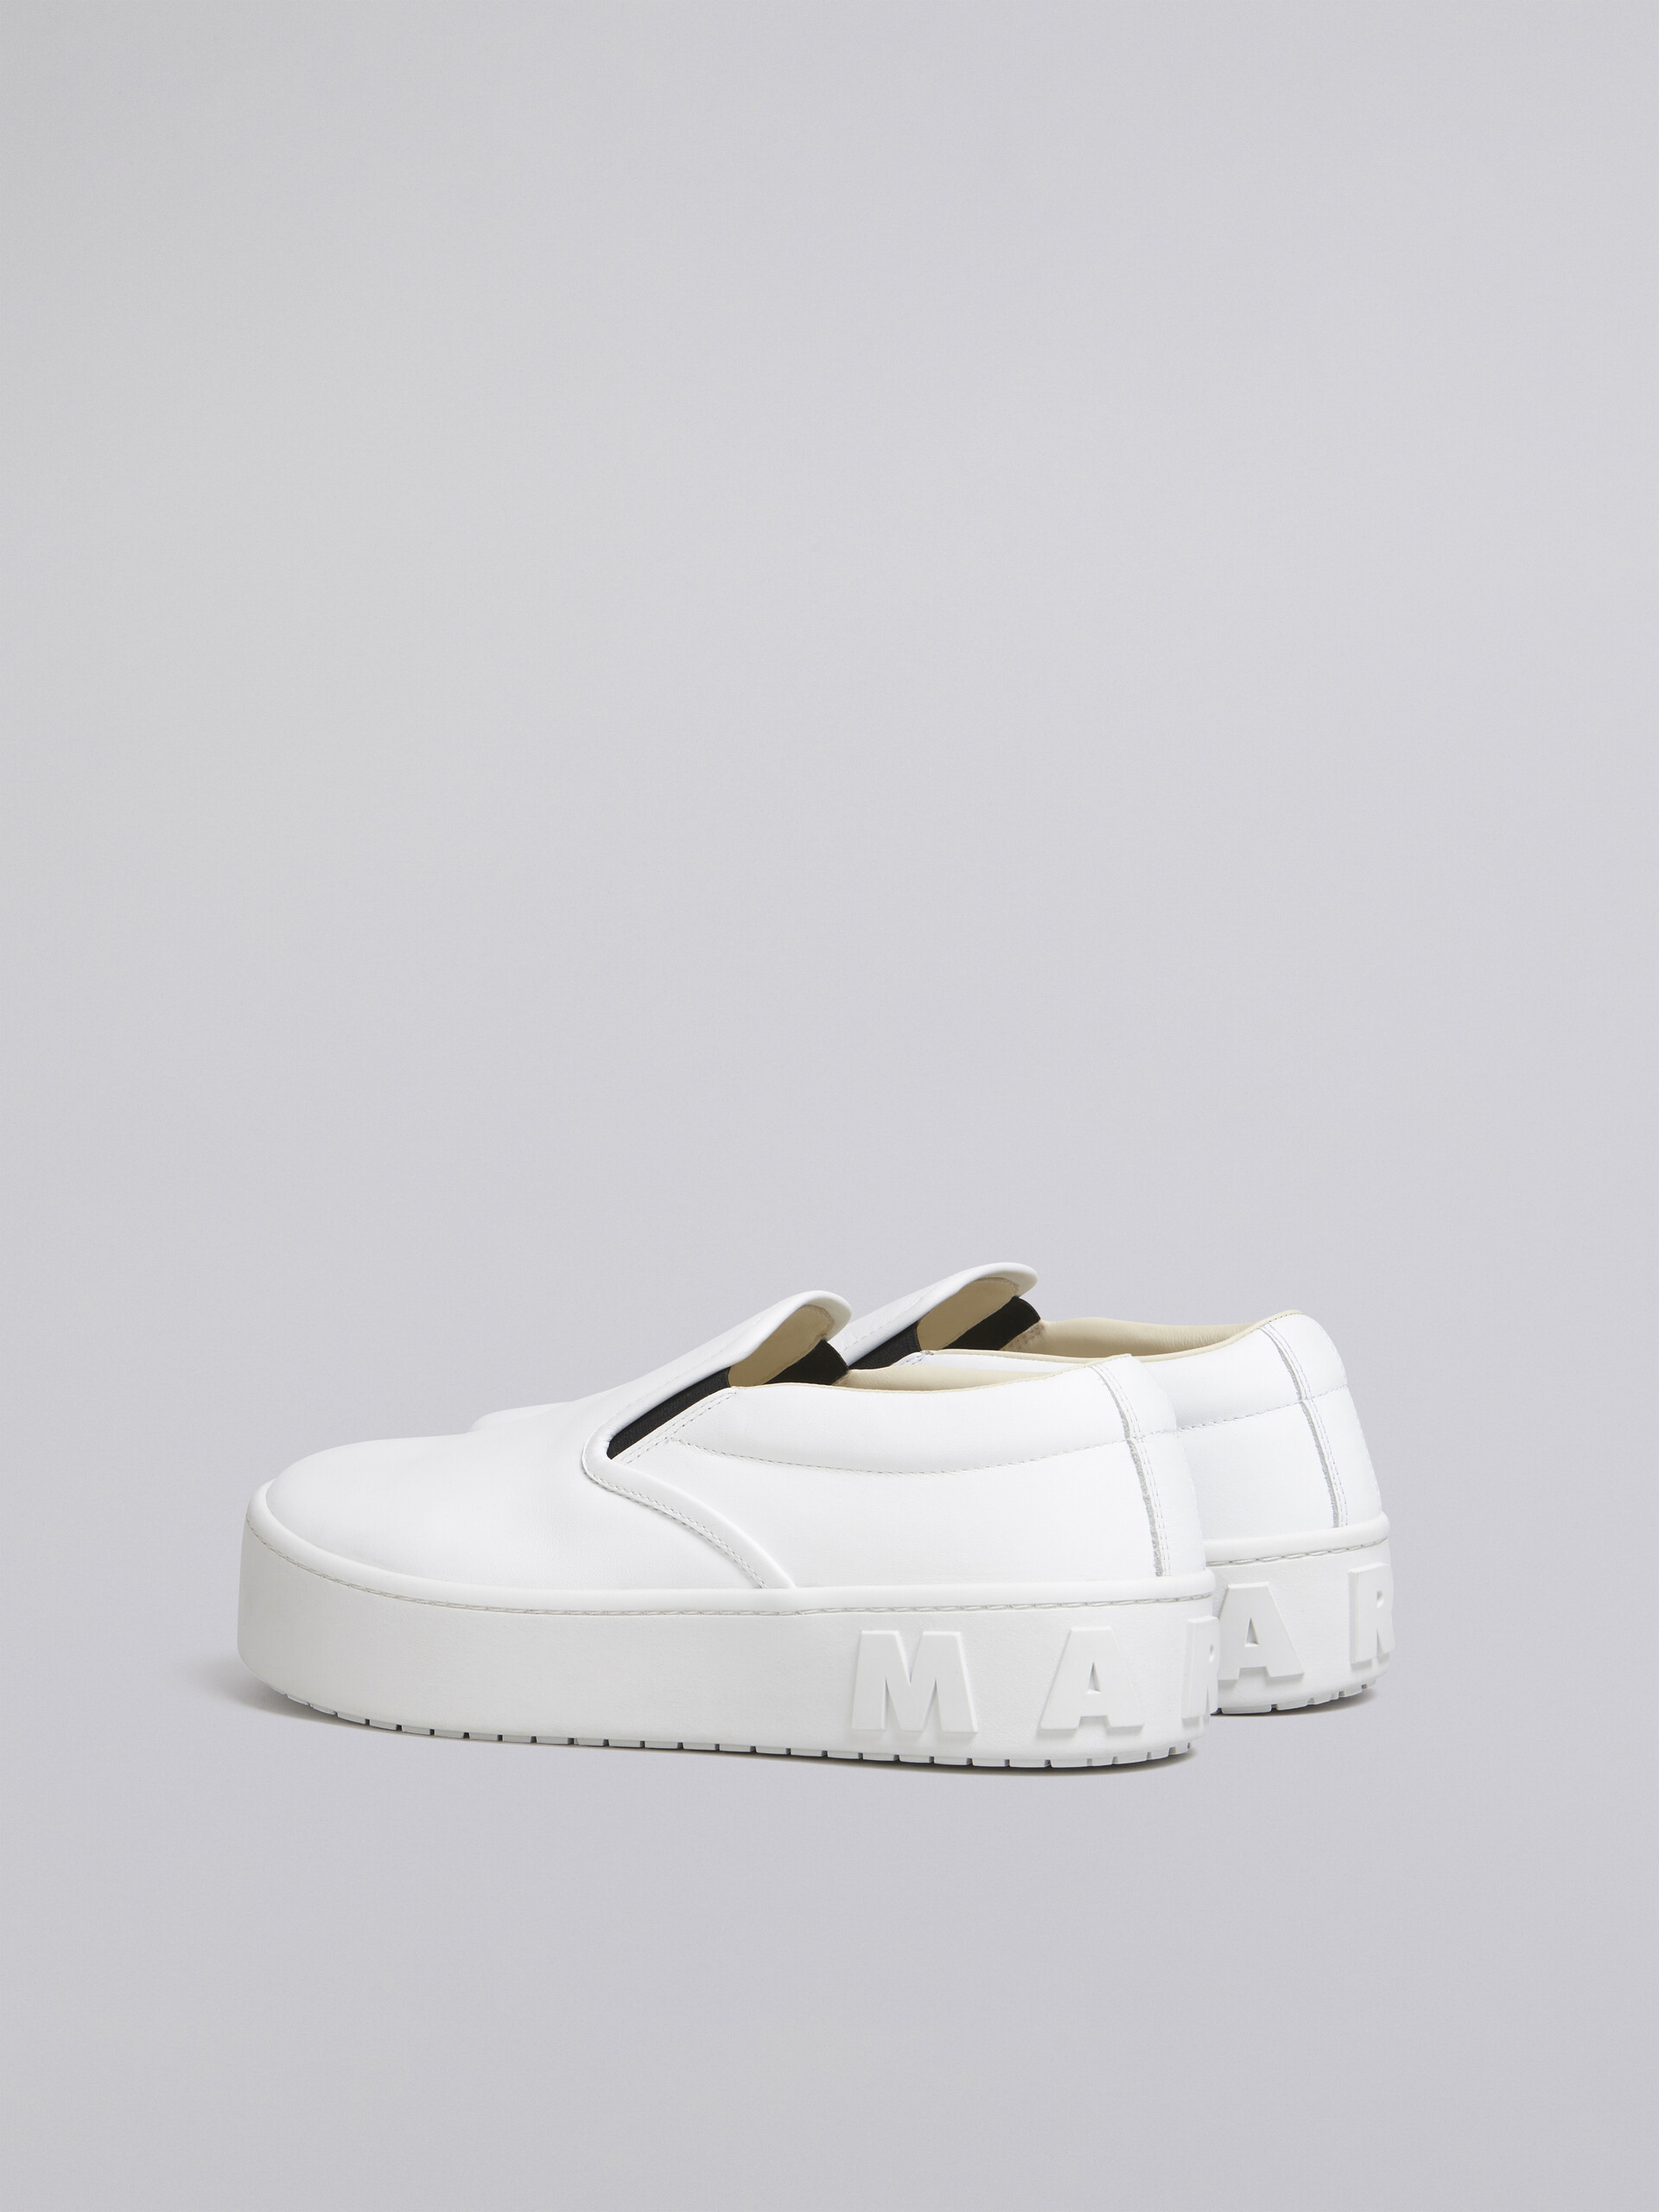 White calfskin slip-on sneaker with raised maxi Marni logo - Sneakers - Image 3